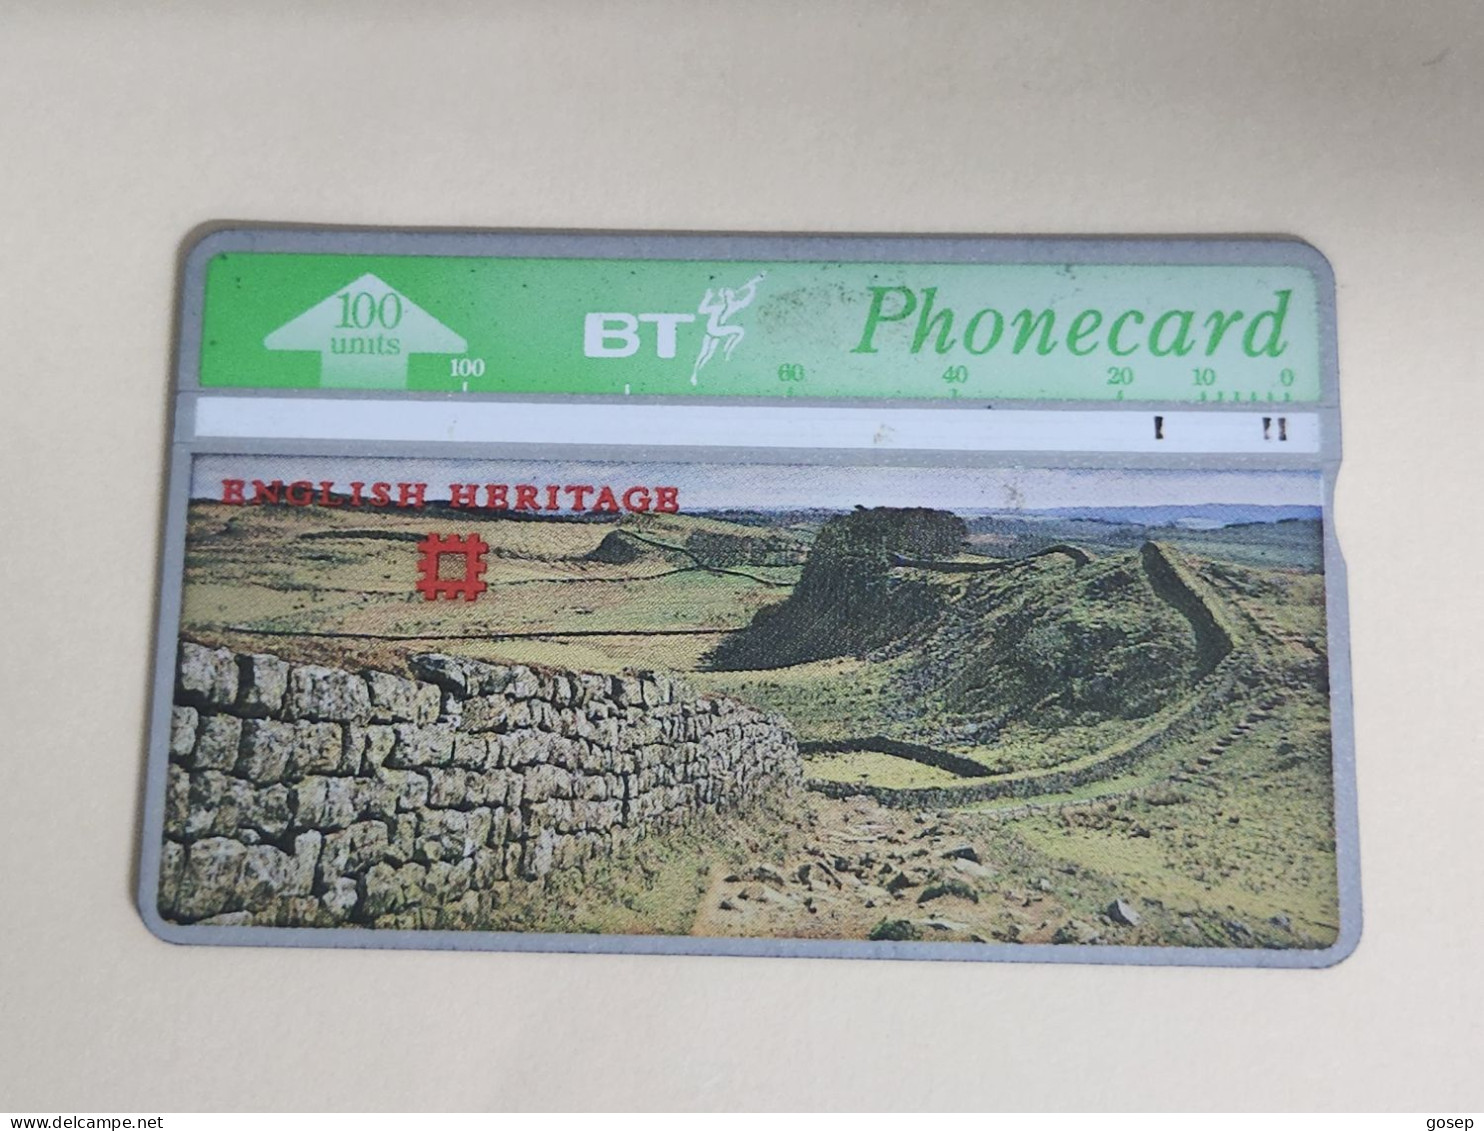 United Kingdom-(BTA117)HERITAGE-Hadrian's Wall-(203)(100units)(527G24931)price Cataloge3.00£-used+1card Prepiad Free - BT Emissioni Pubblicitarie